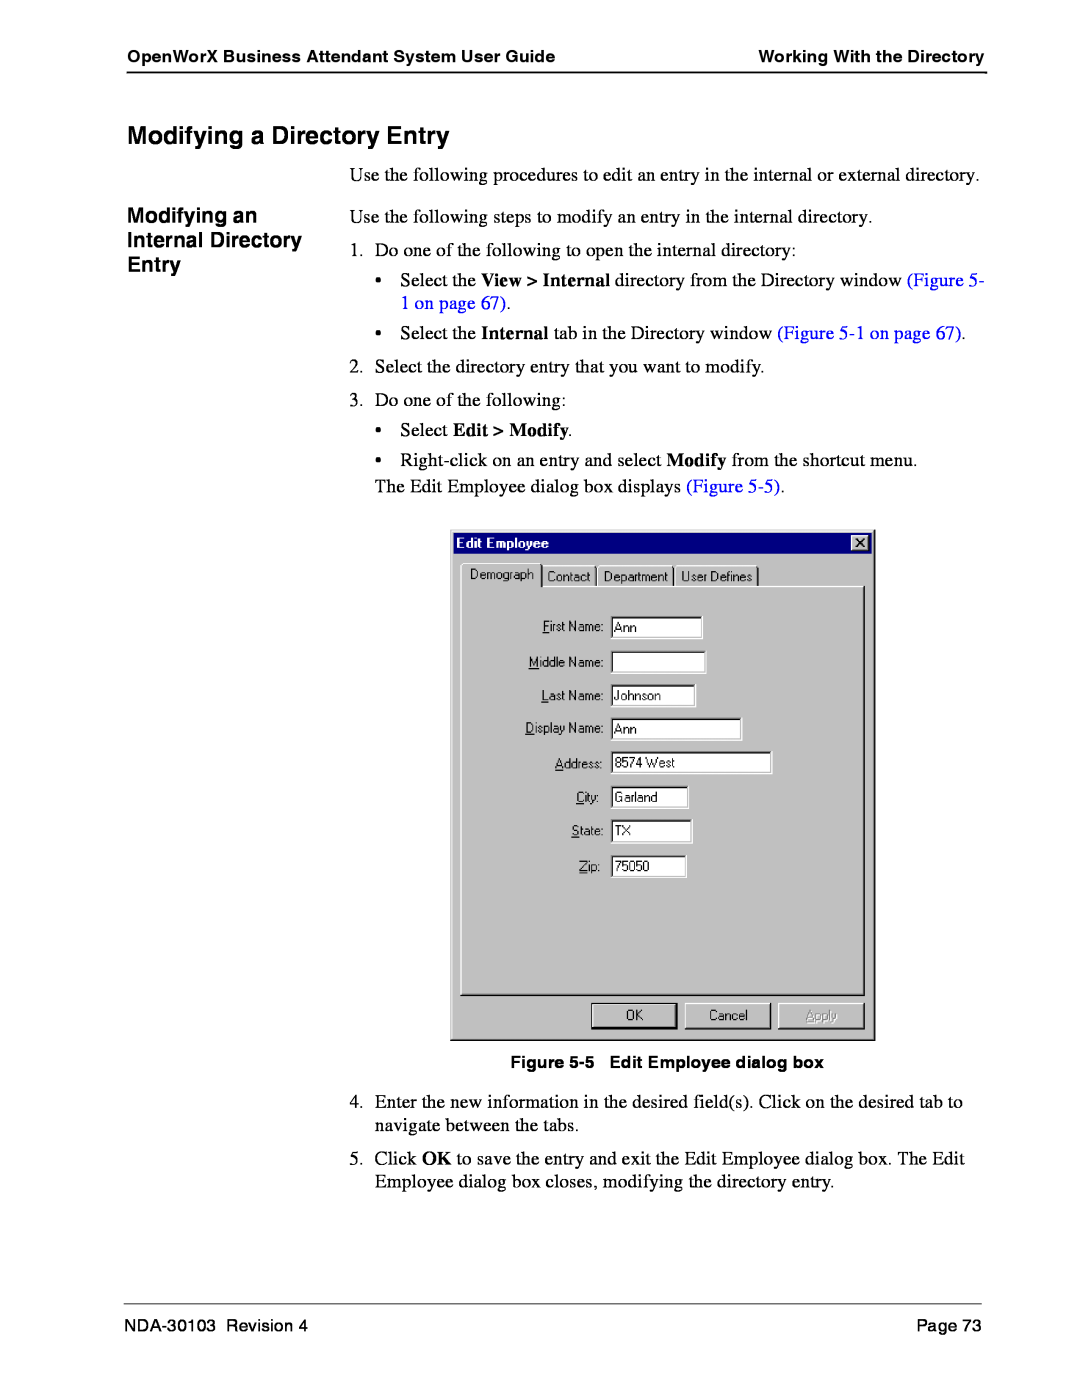 NEC NDA-30103-004 manual Modifying a Directory Entry, Modifying an Internal Directory Entry 